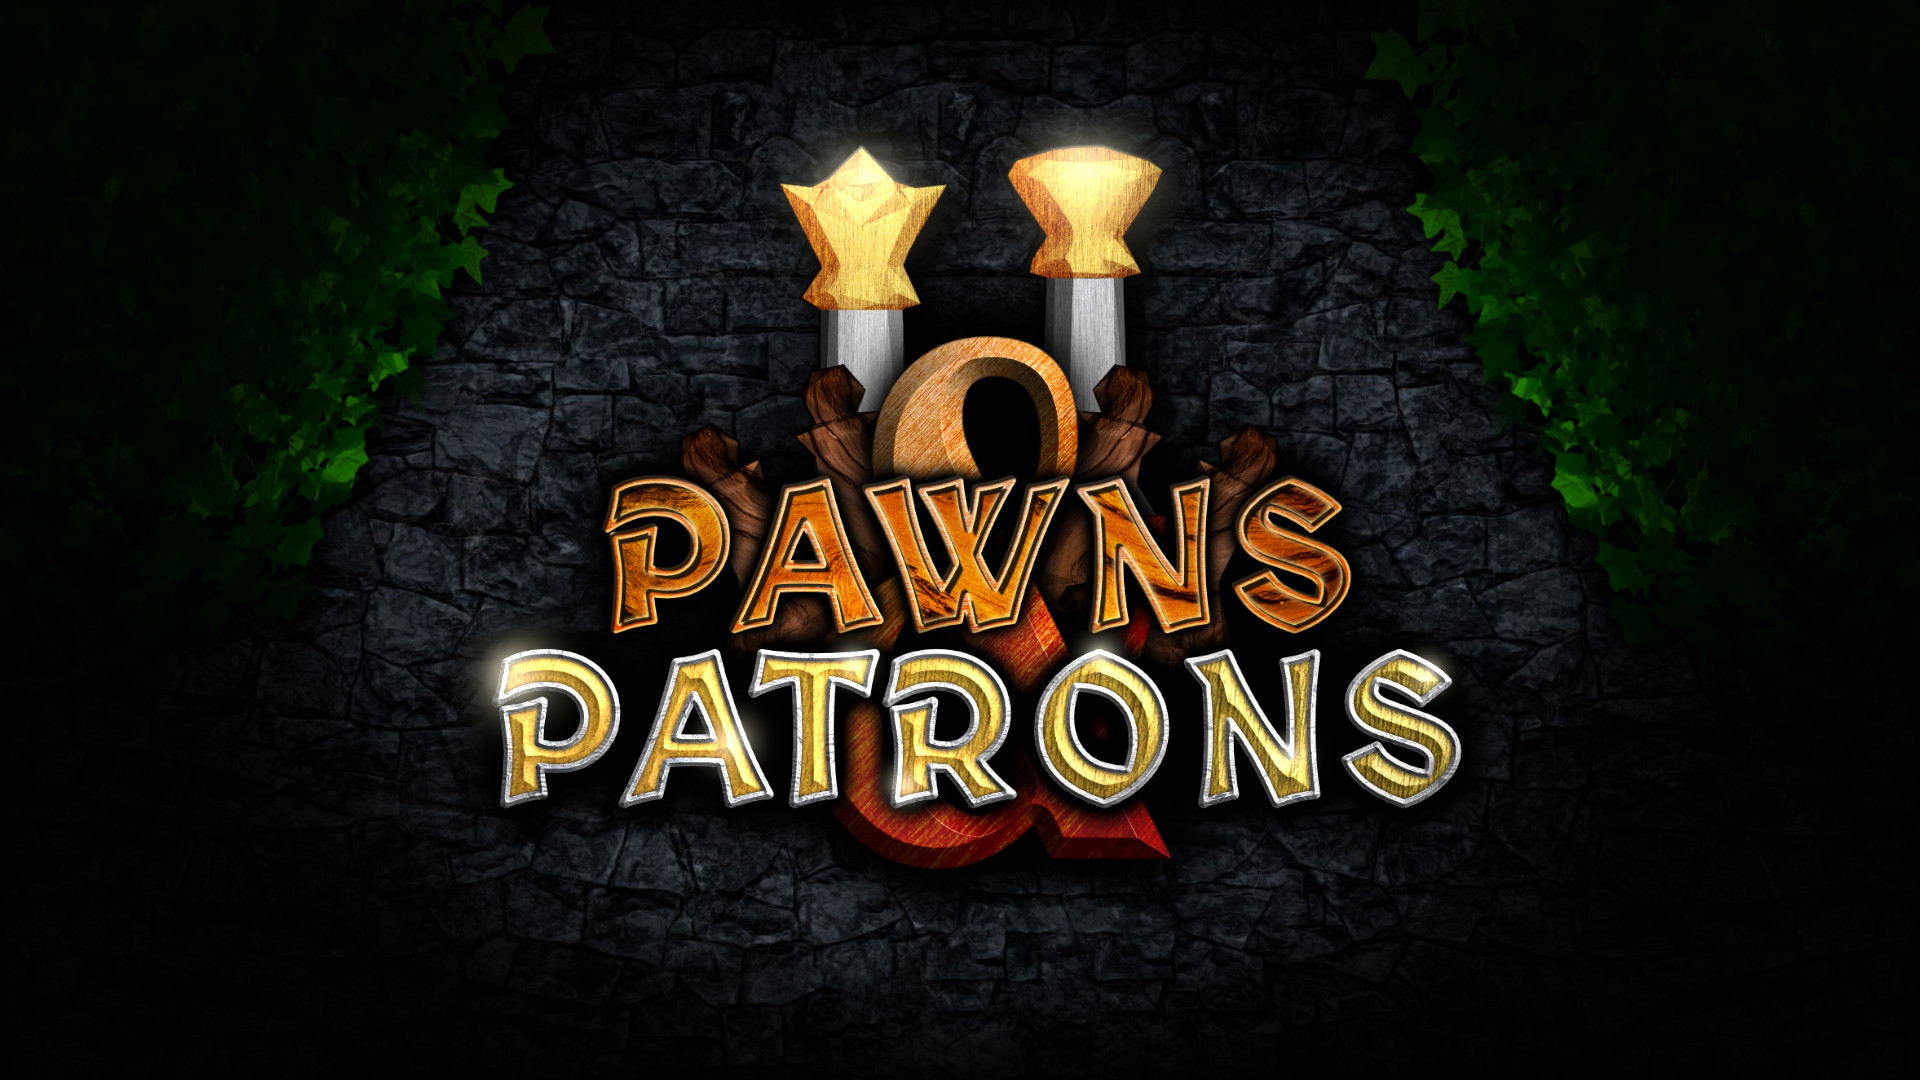 Pawns and Patrons logo.jpg